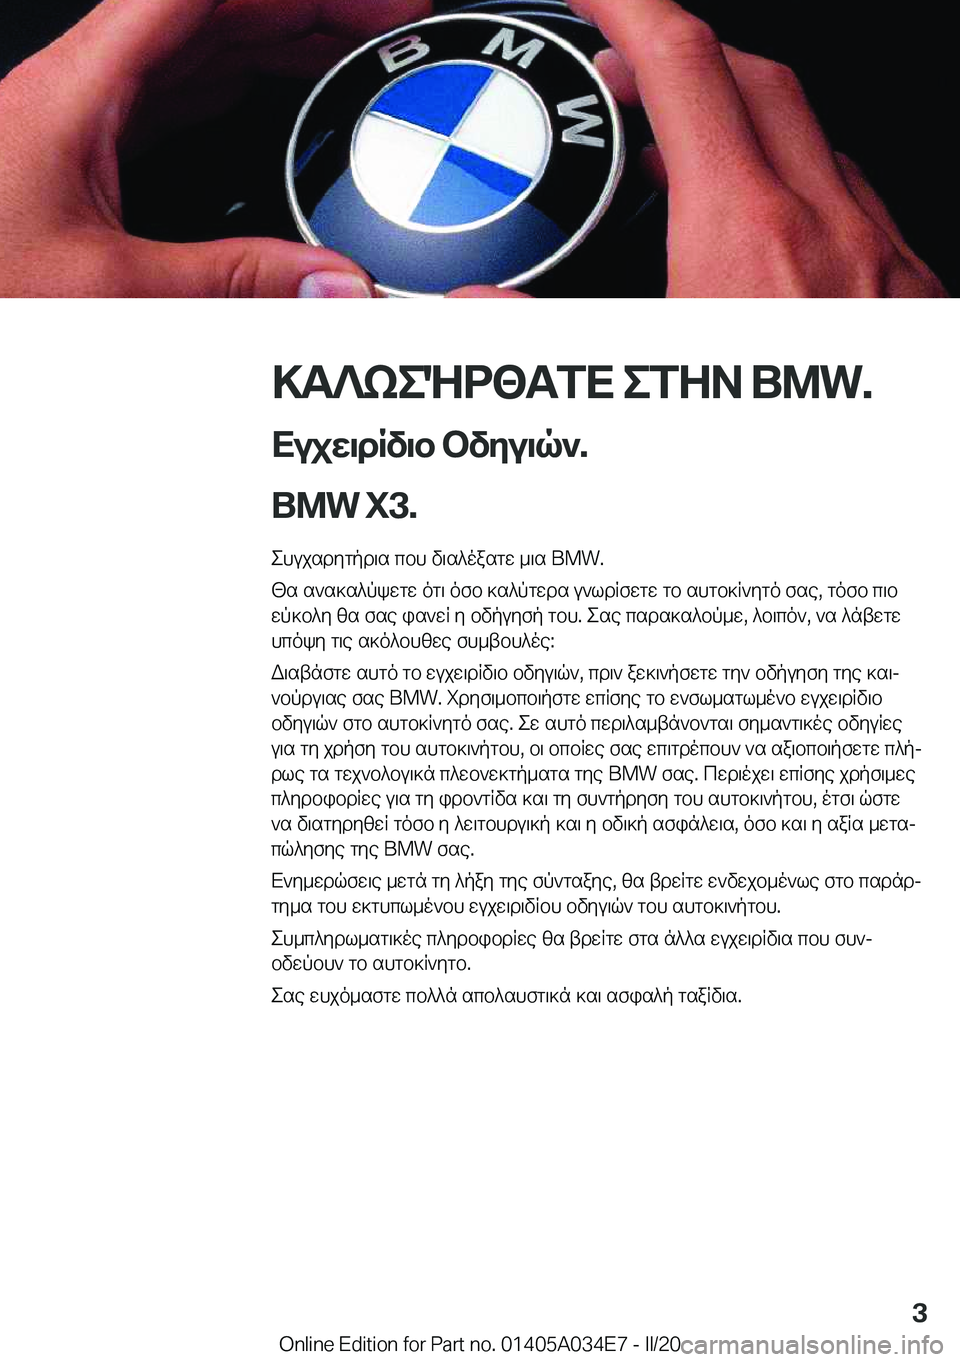 BMW X3 2020  ΟΔΗΓΌΣ ΧΡΉΣΗΣ (in Greek) >T?keNd<TfX�efZA��B�M�W�.
Xujw\dRv\b�bvyu\q`�.
�B�M�W��X�3�. ehujsdygpd\s�cbh�v\s^oasgw�_\s��B�M�W�.
<s�s`s]s^pkwgw�o